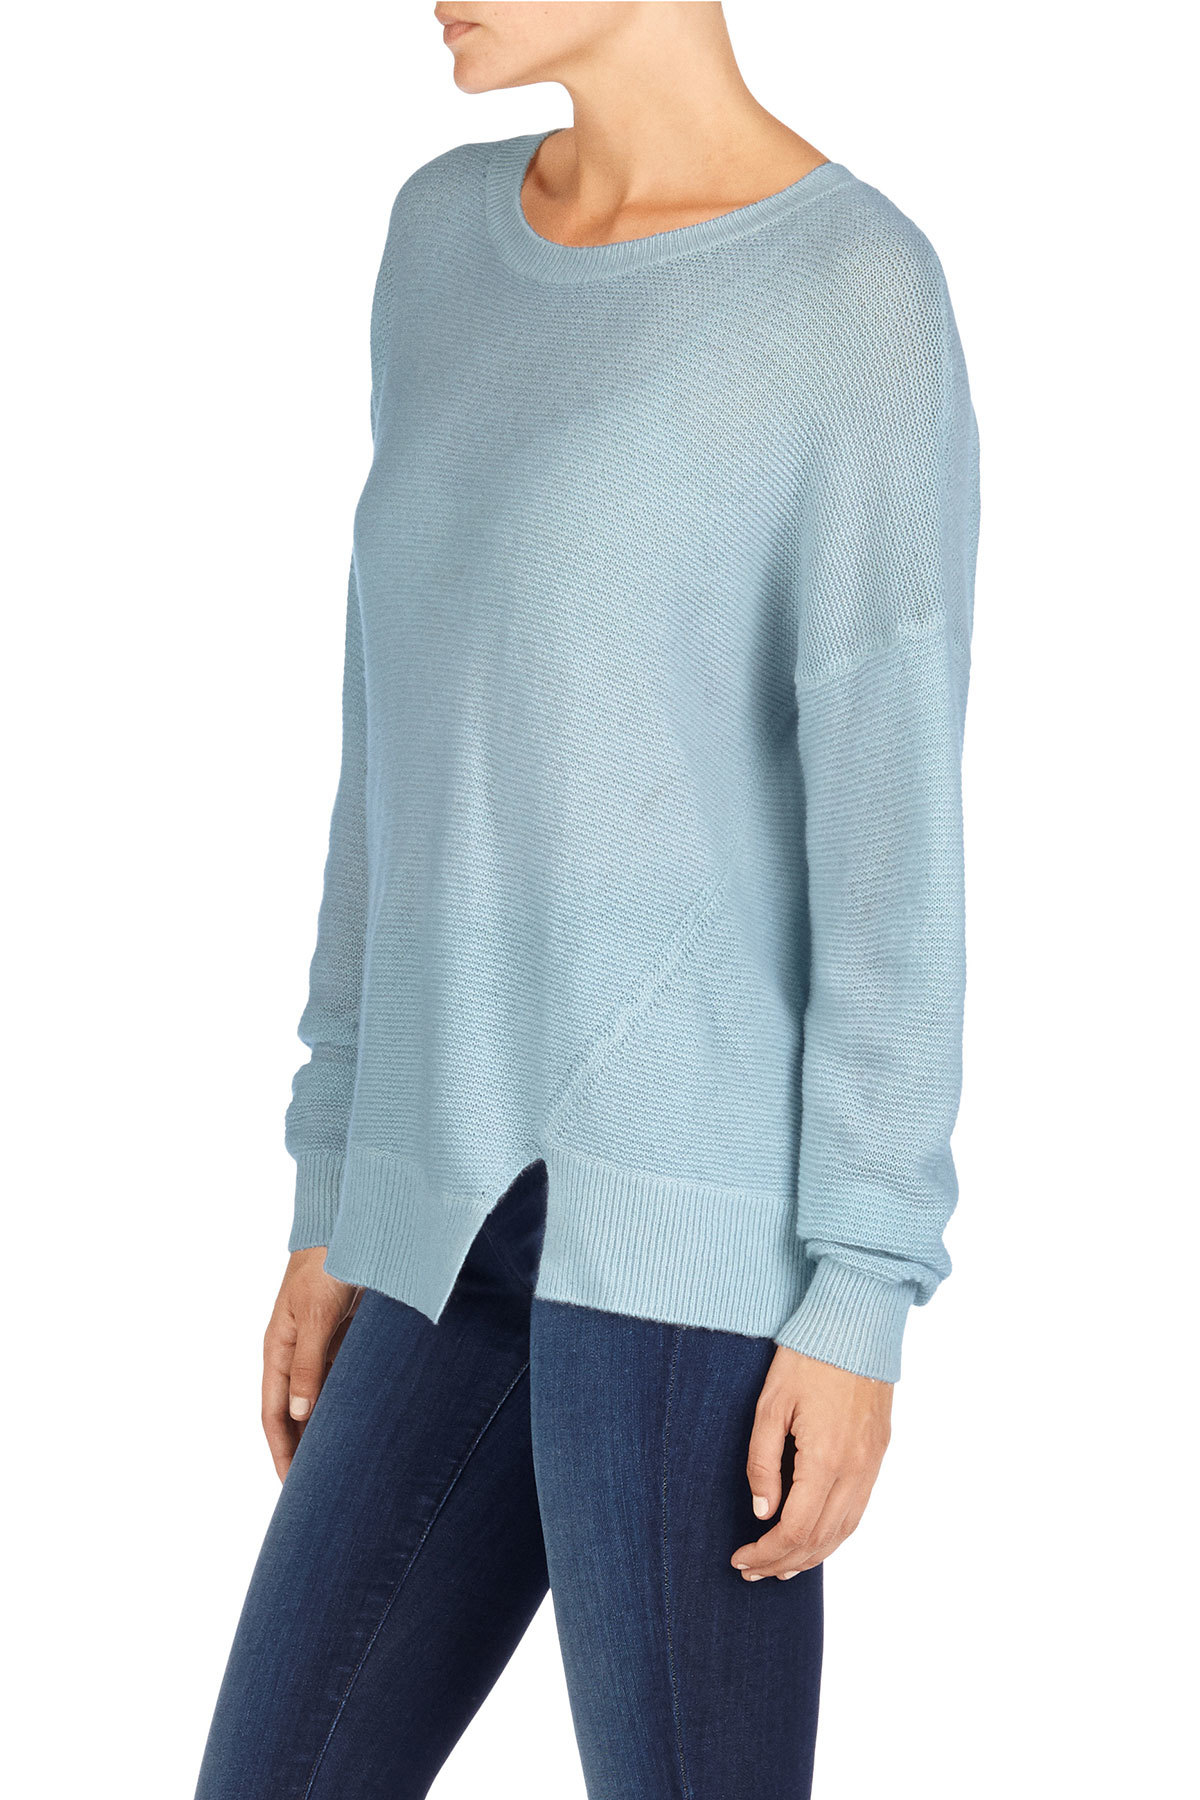 J Brand Reno Sweater in Blue - Lyst